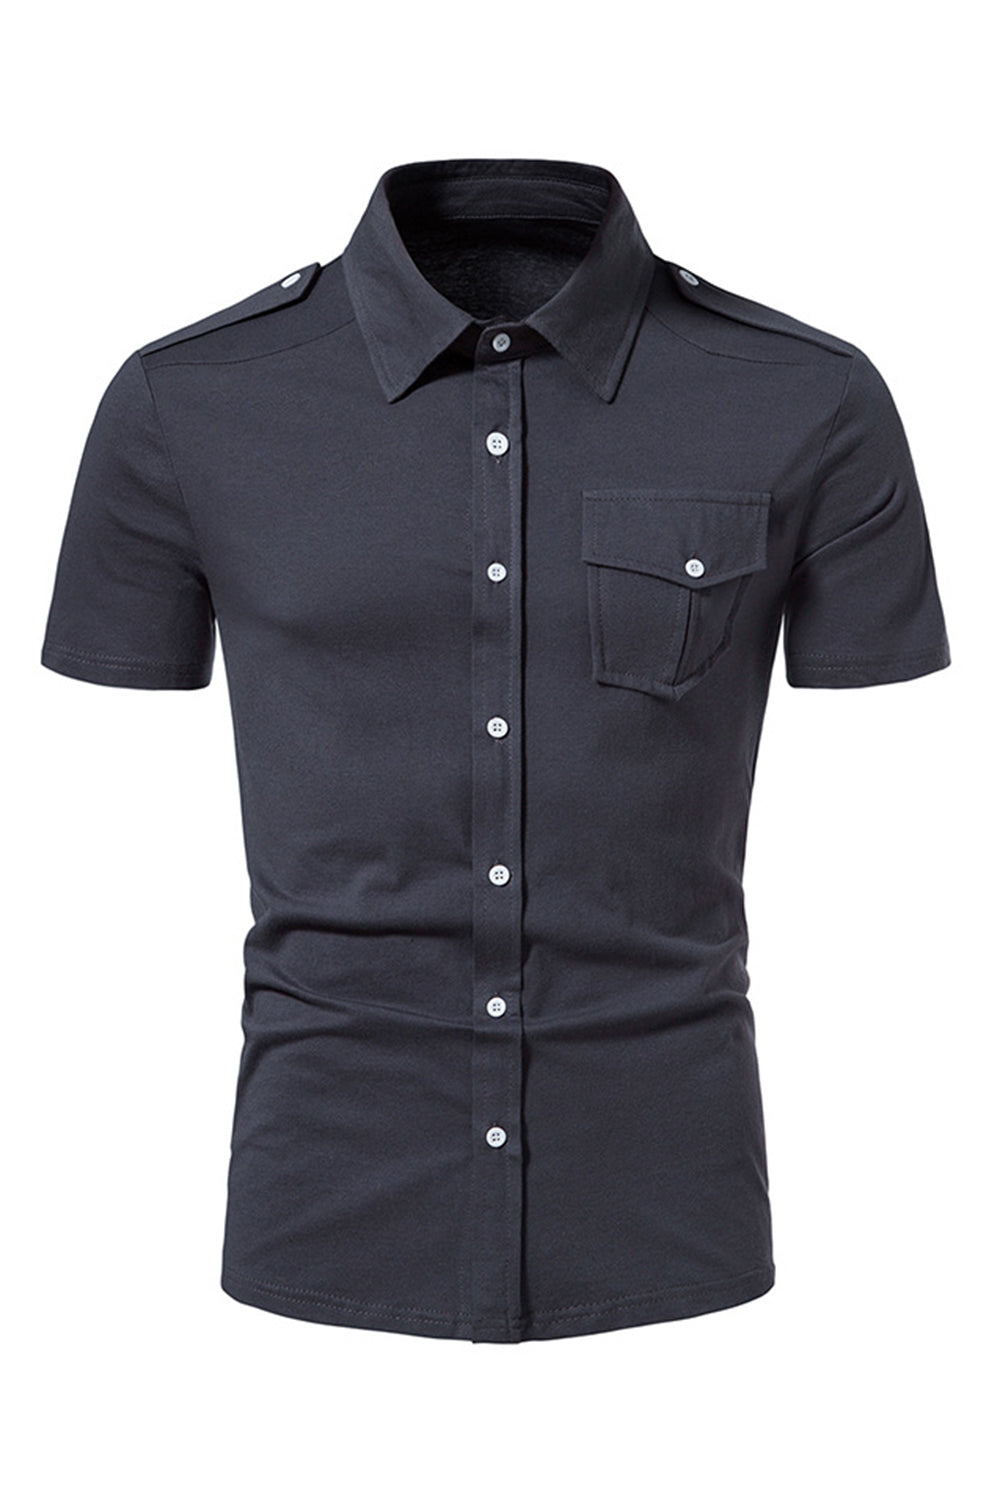 Dark Grey Short Sleeves Single-Breasted Casual Polo Shirt